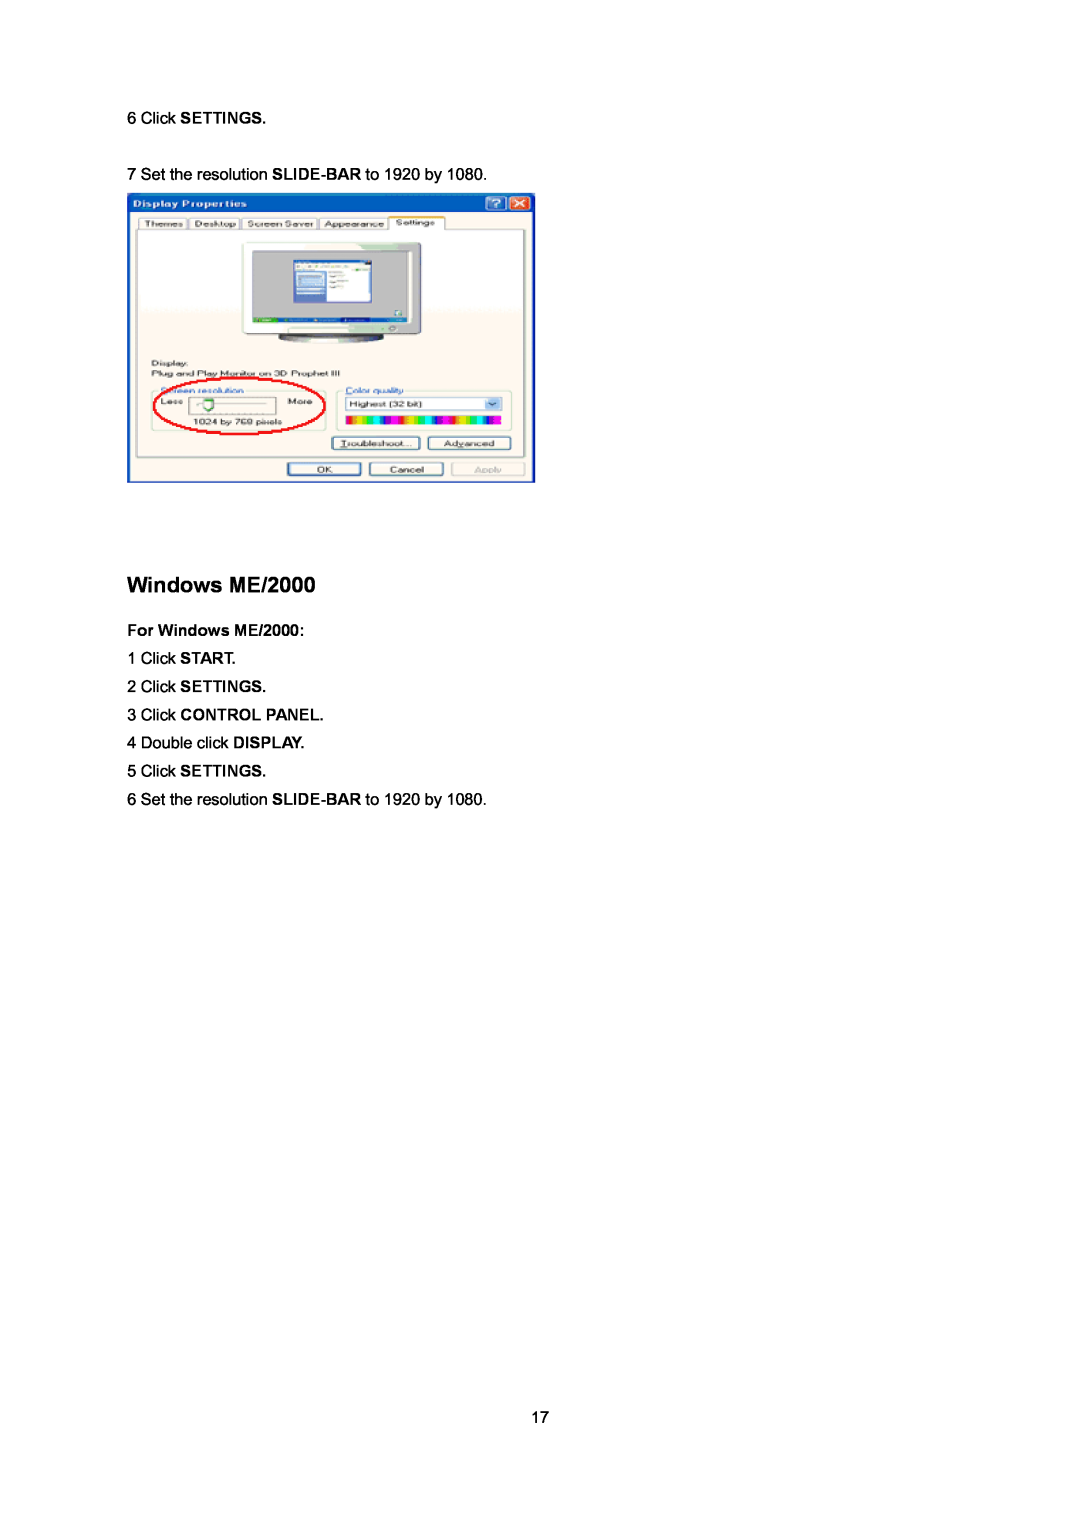 AOC E2795VH manual For Windows ME/2000, Click SETTINGS 3 Click CONTROL PANEL 